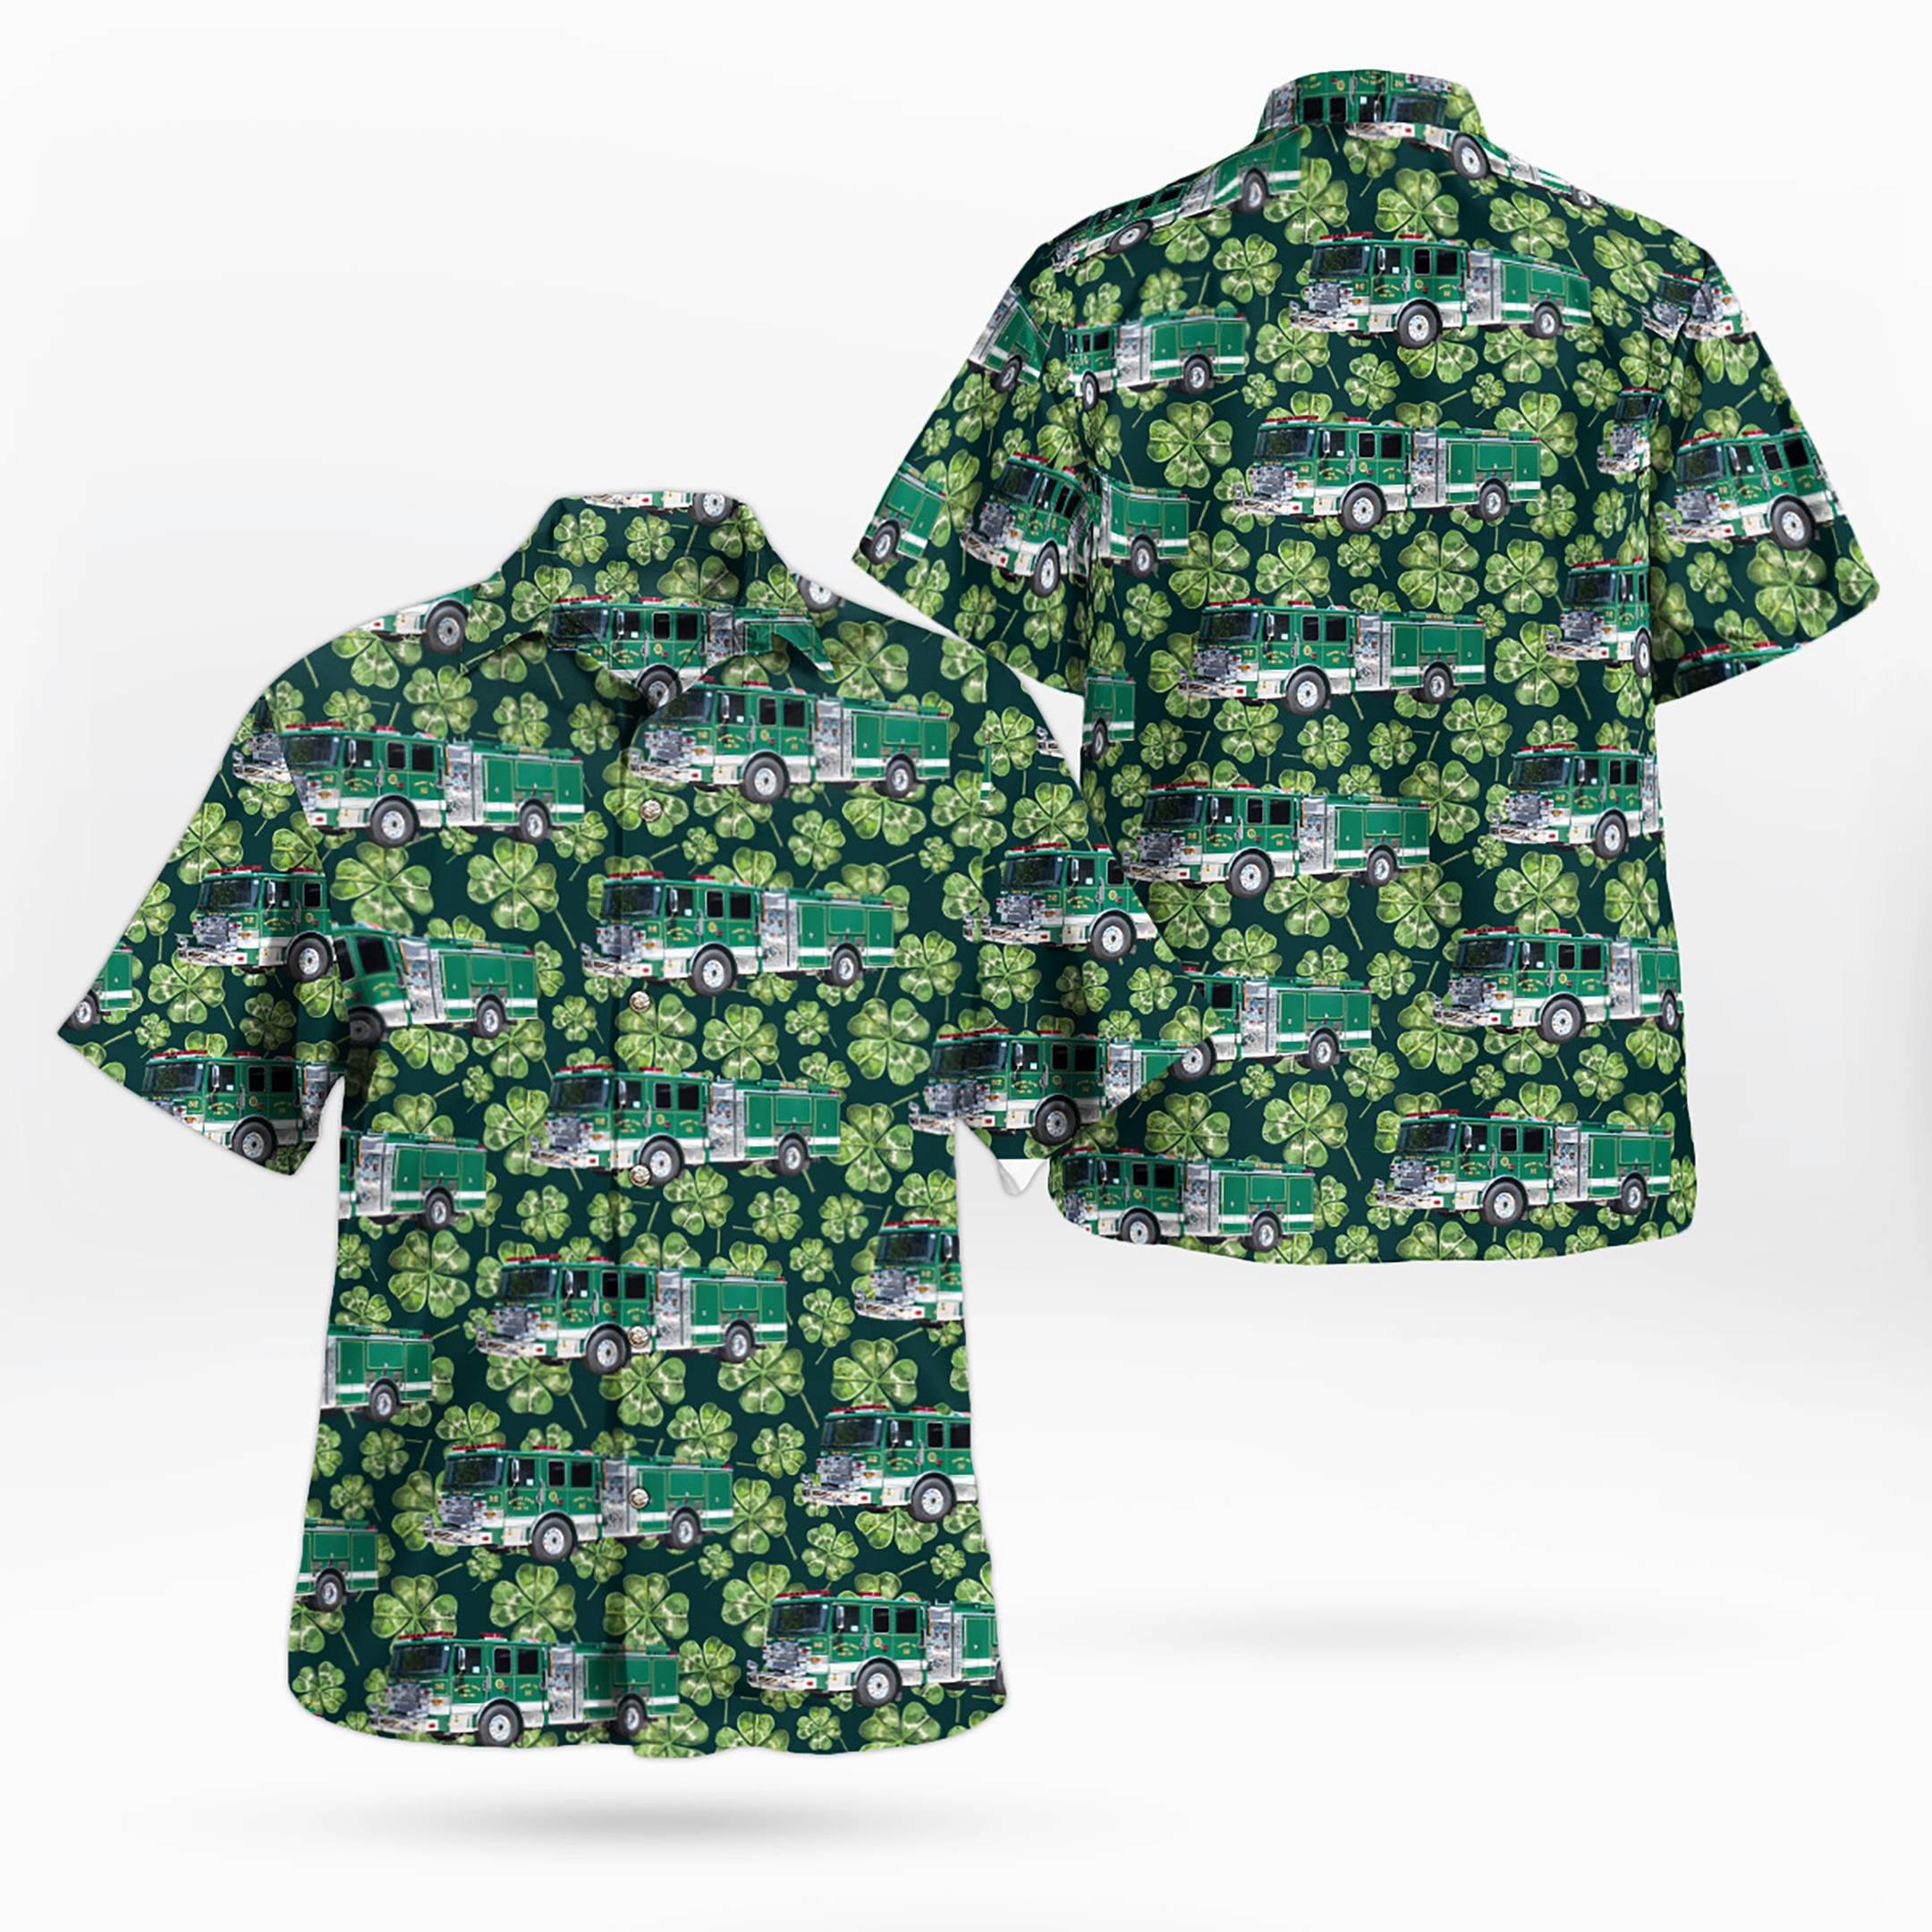 Get a new Hawaiian shirt to enjoy summer vacation 265